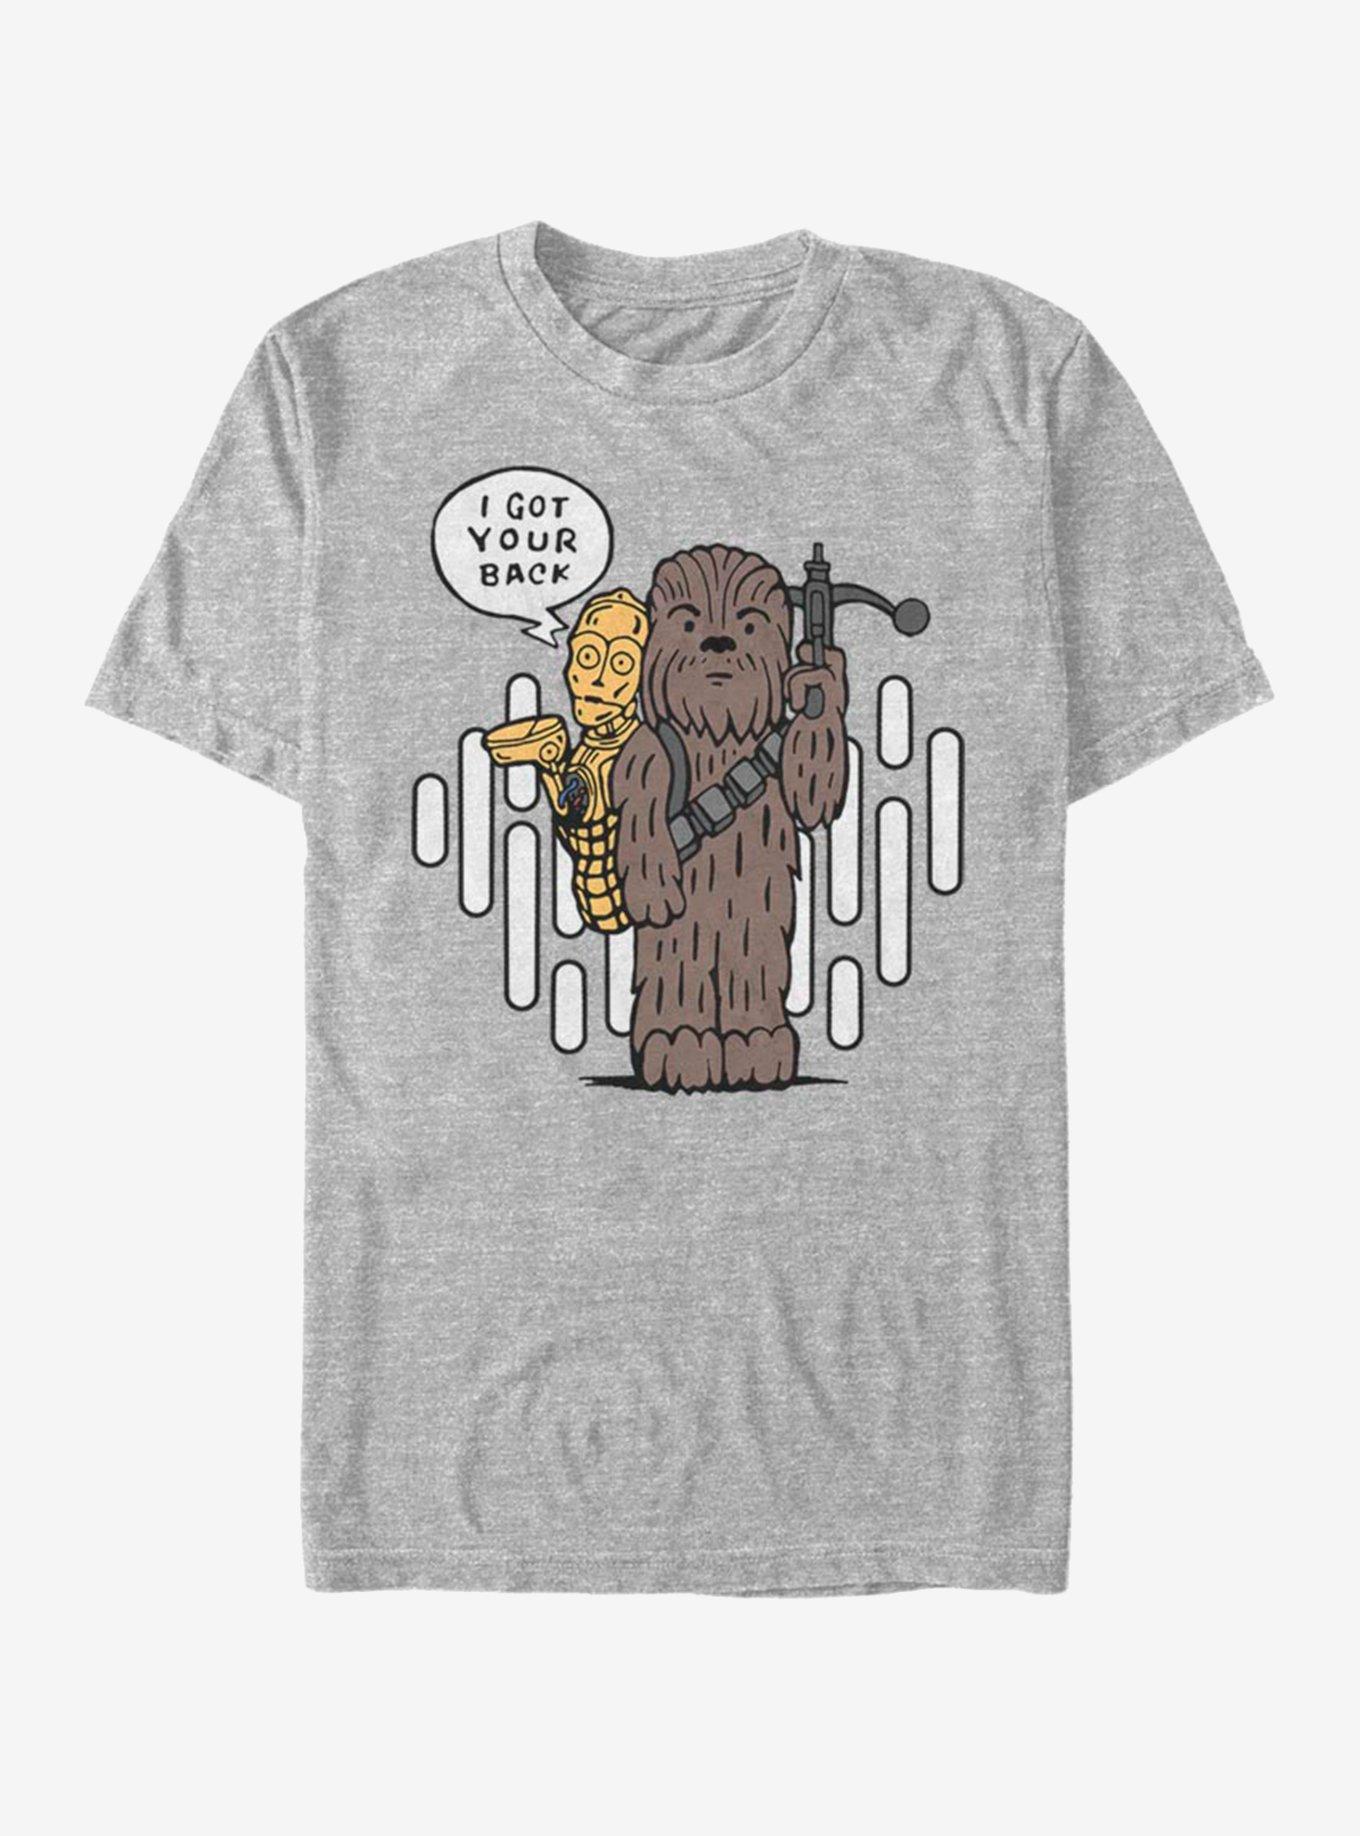 Star Wars Got Your Back T-Shirt